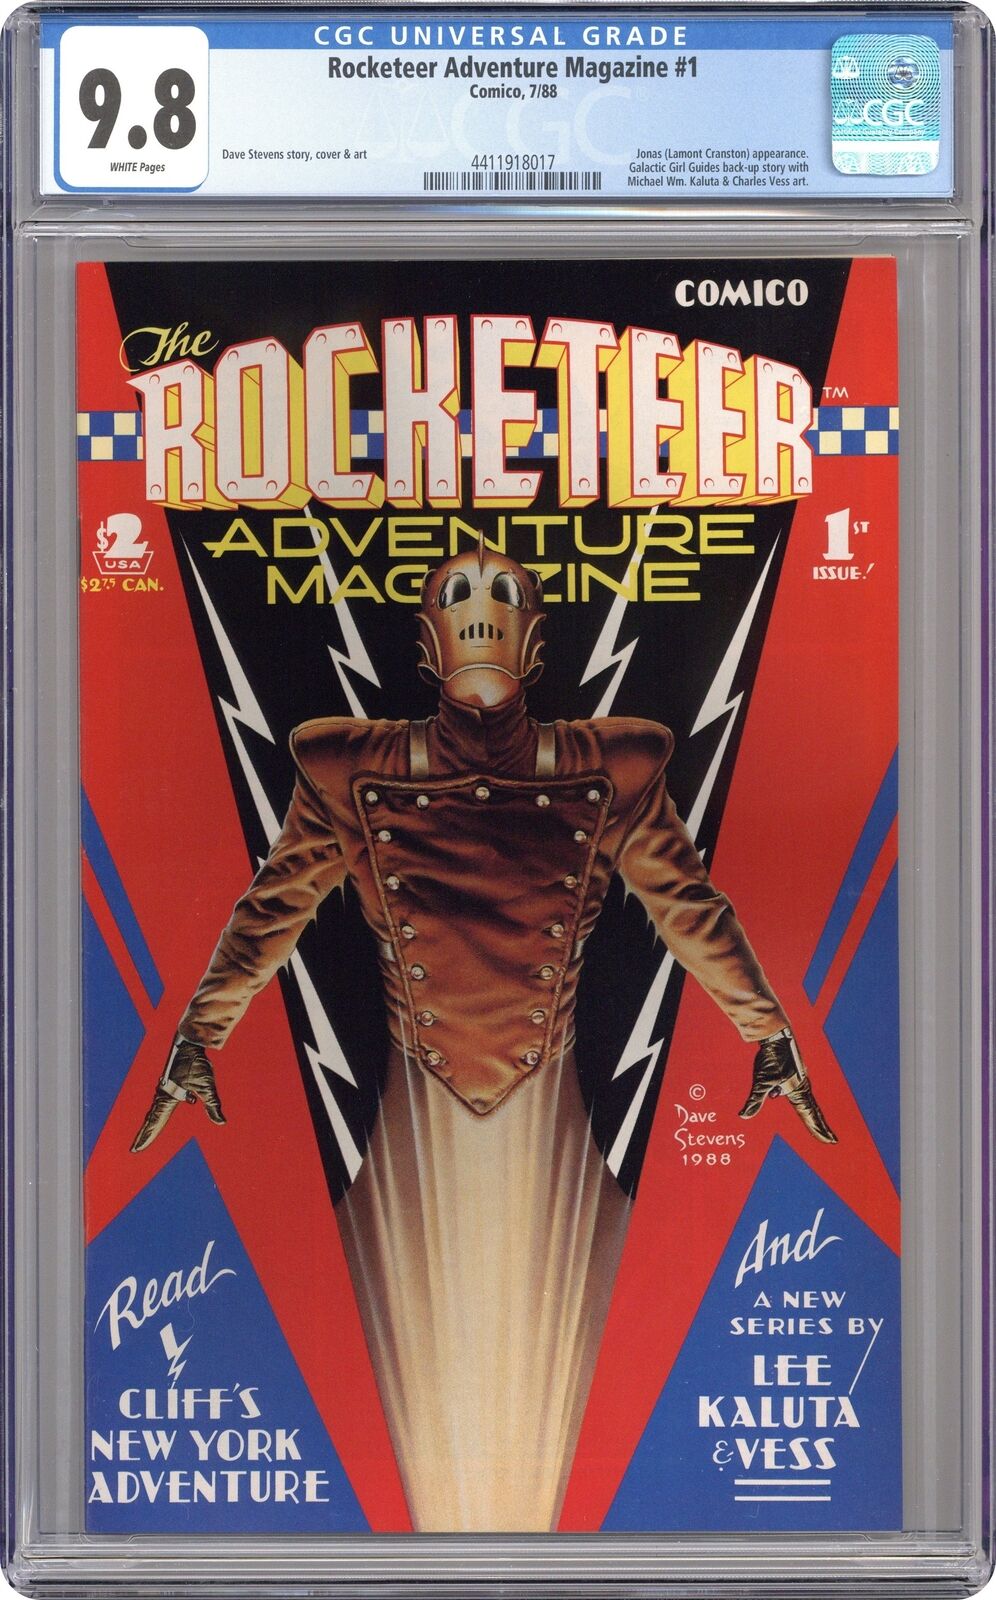 Rocketeer Adventure Magazine #1 CGC 9.8 1988 4411918017